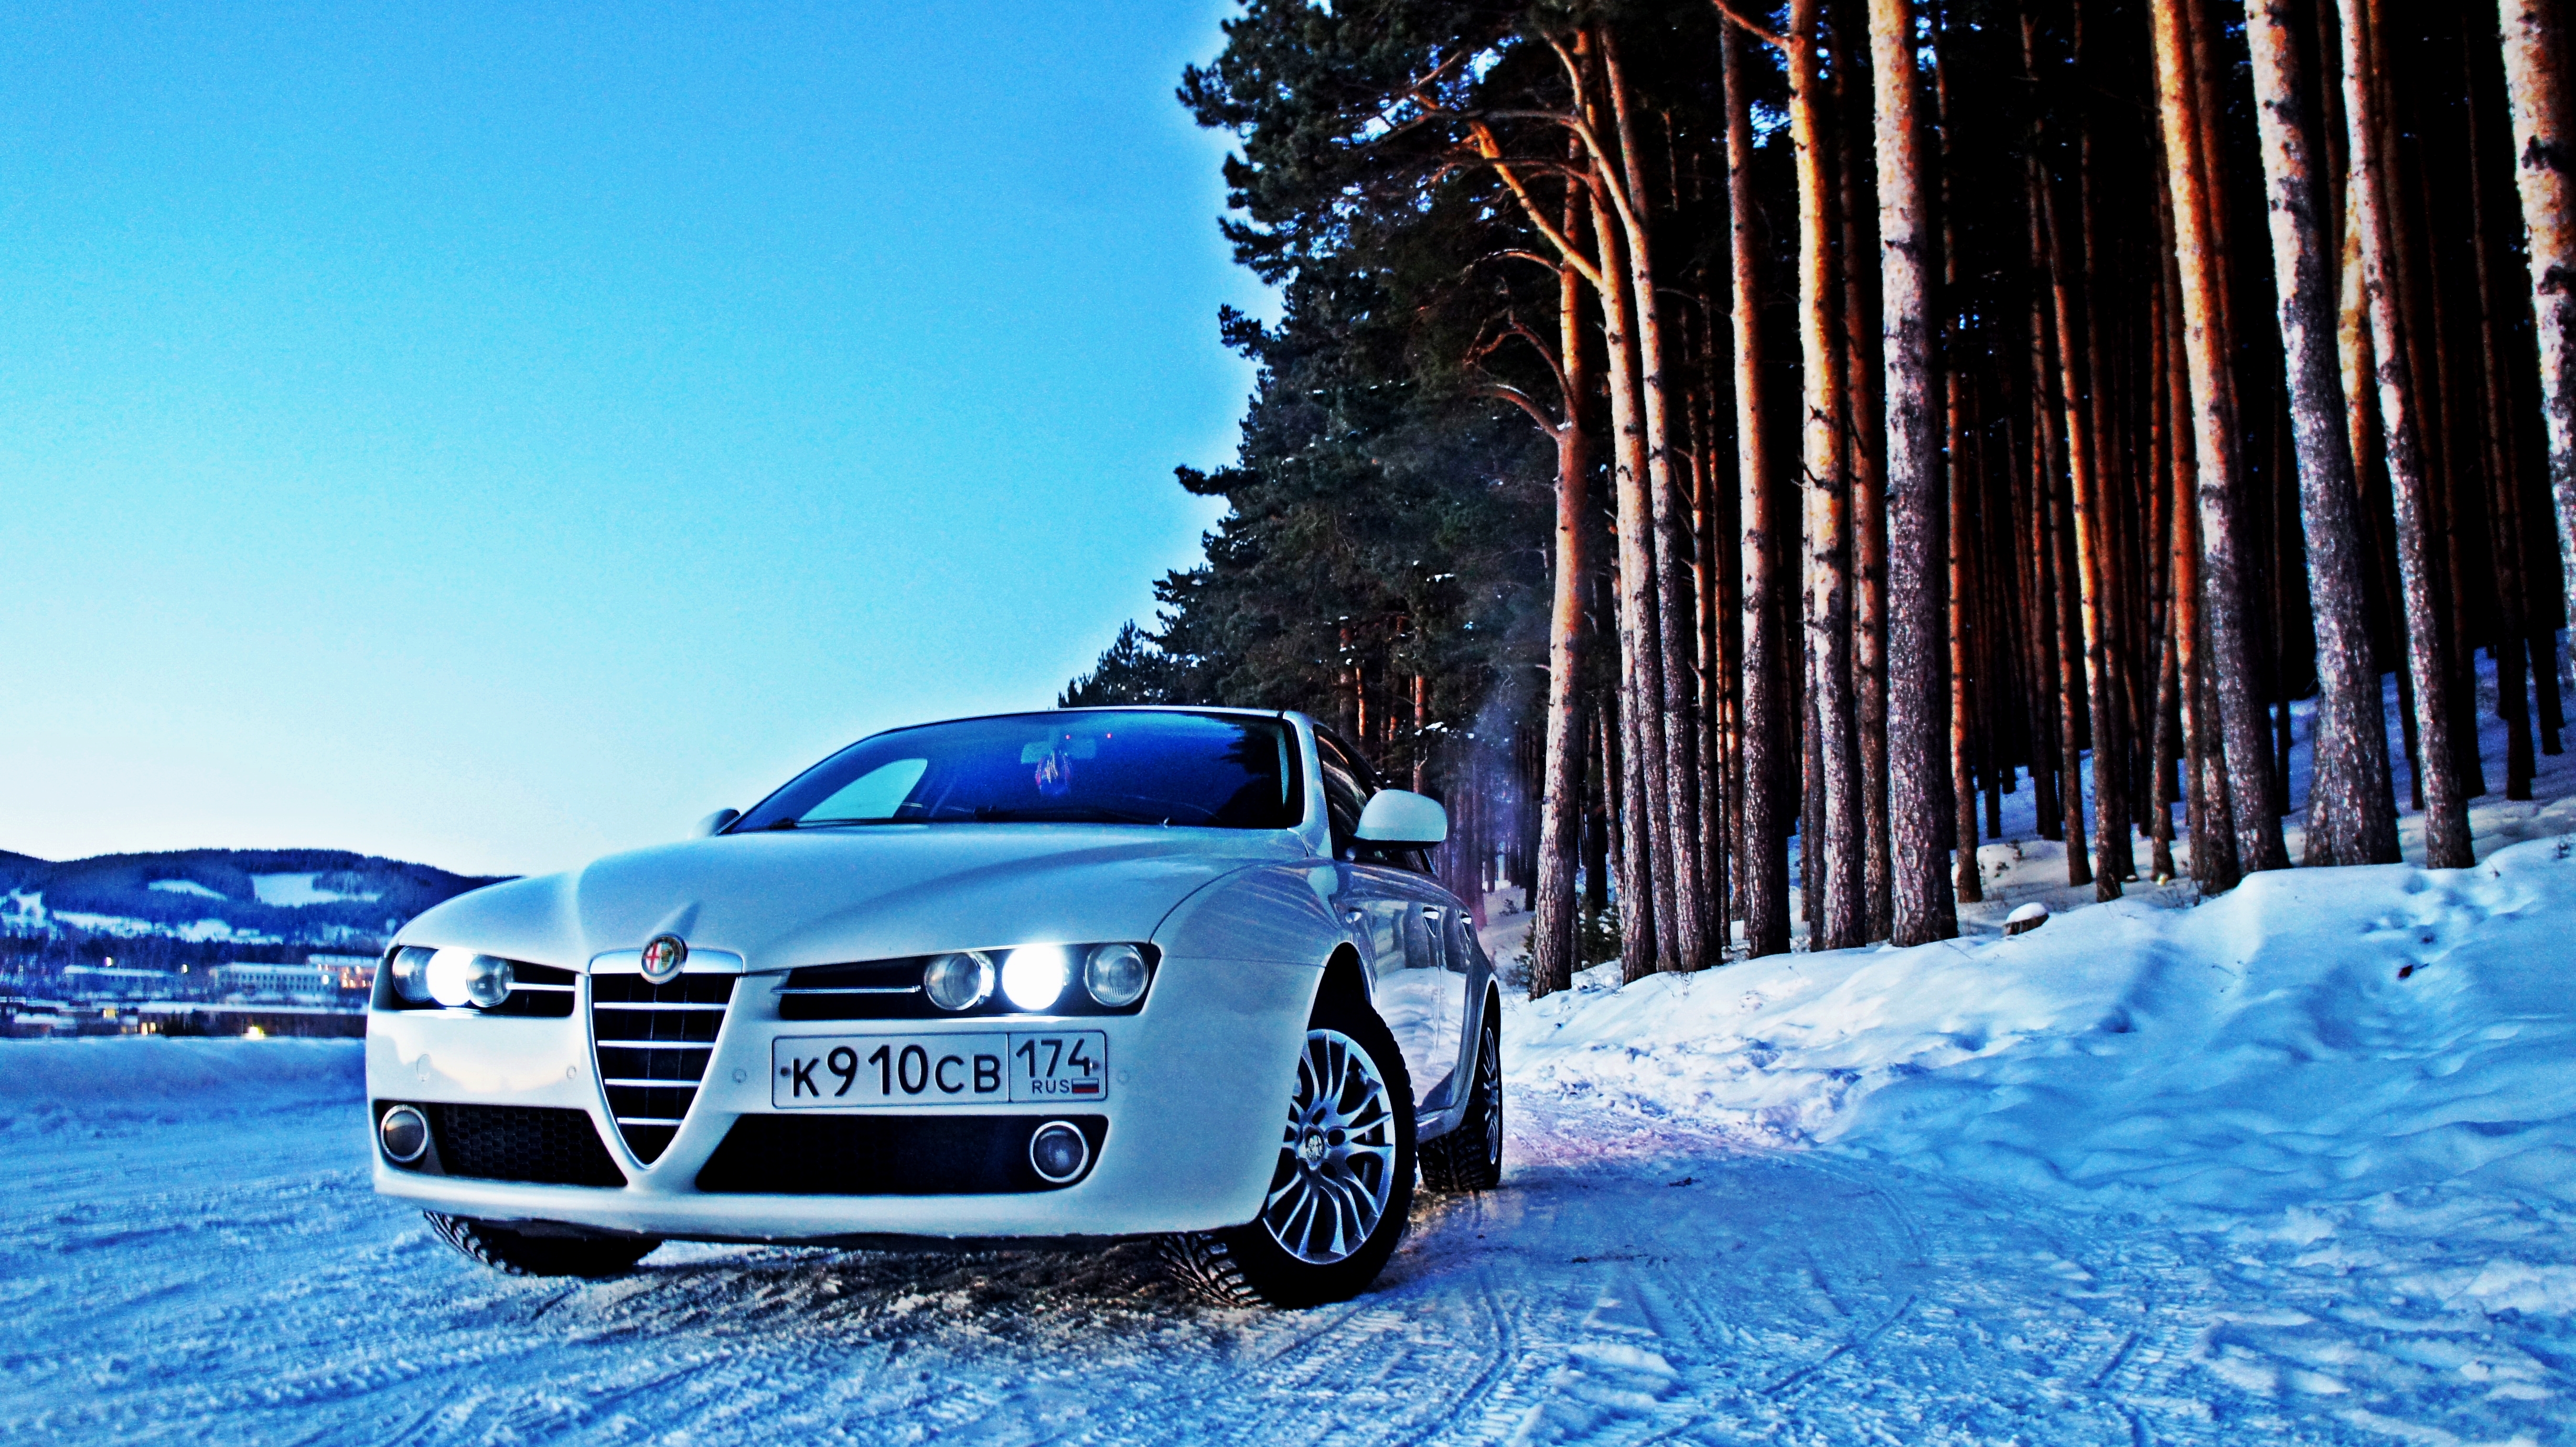 Vehicles Alfa Romeo 159 HD Wallpaper | Background Image